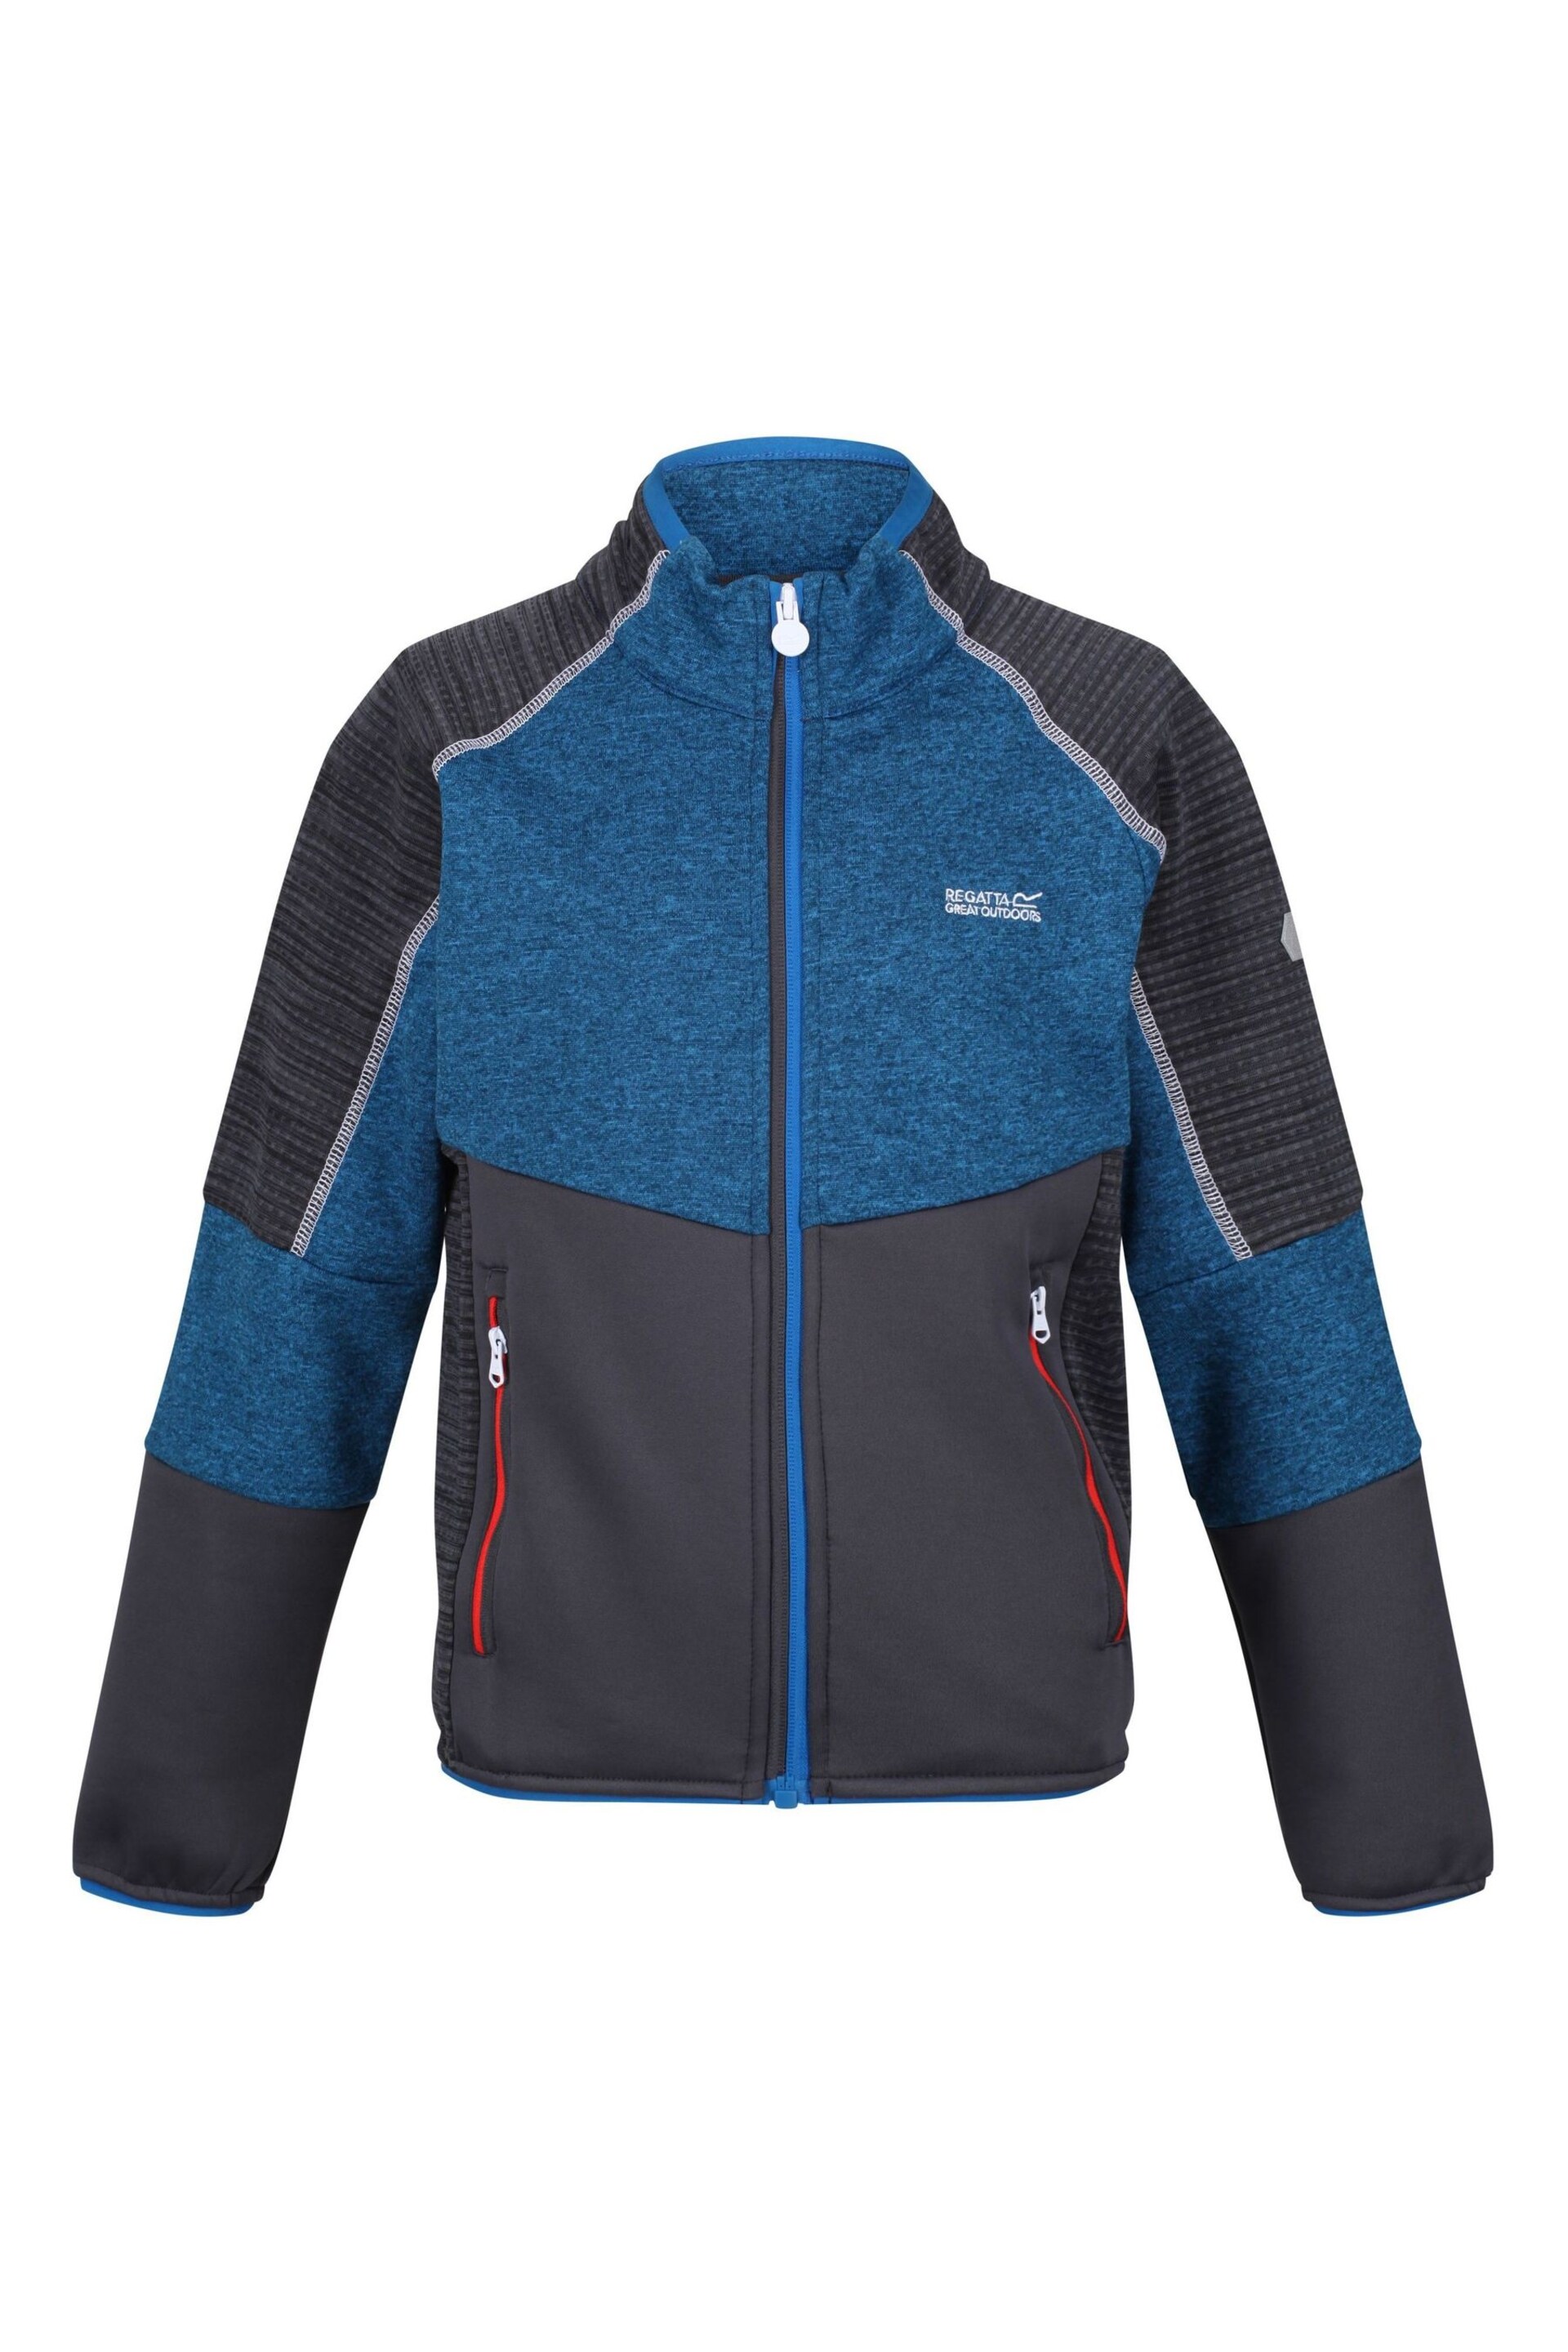 Regatta Blue Oberon V Full Zip Stretch Jacket - Image 1 of 4